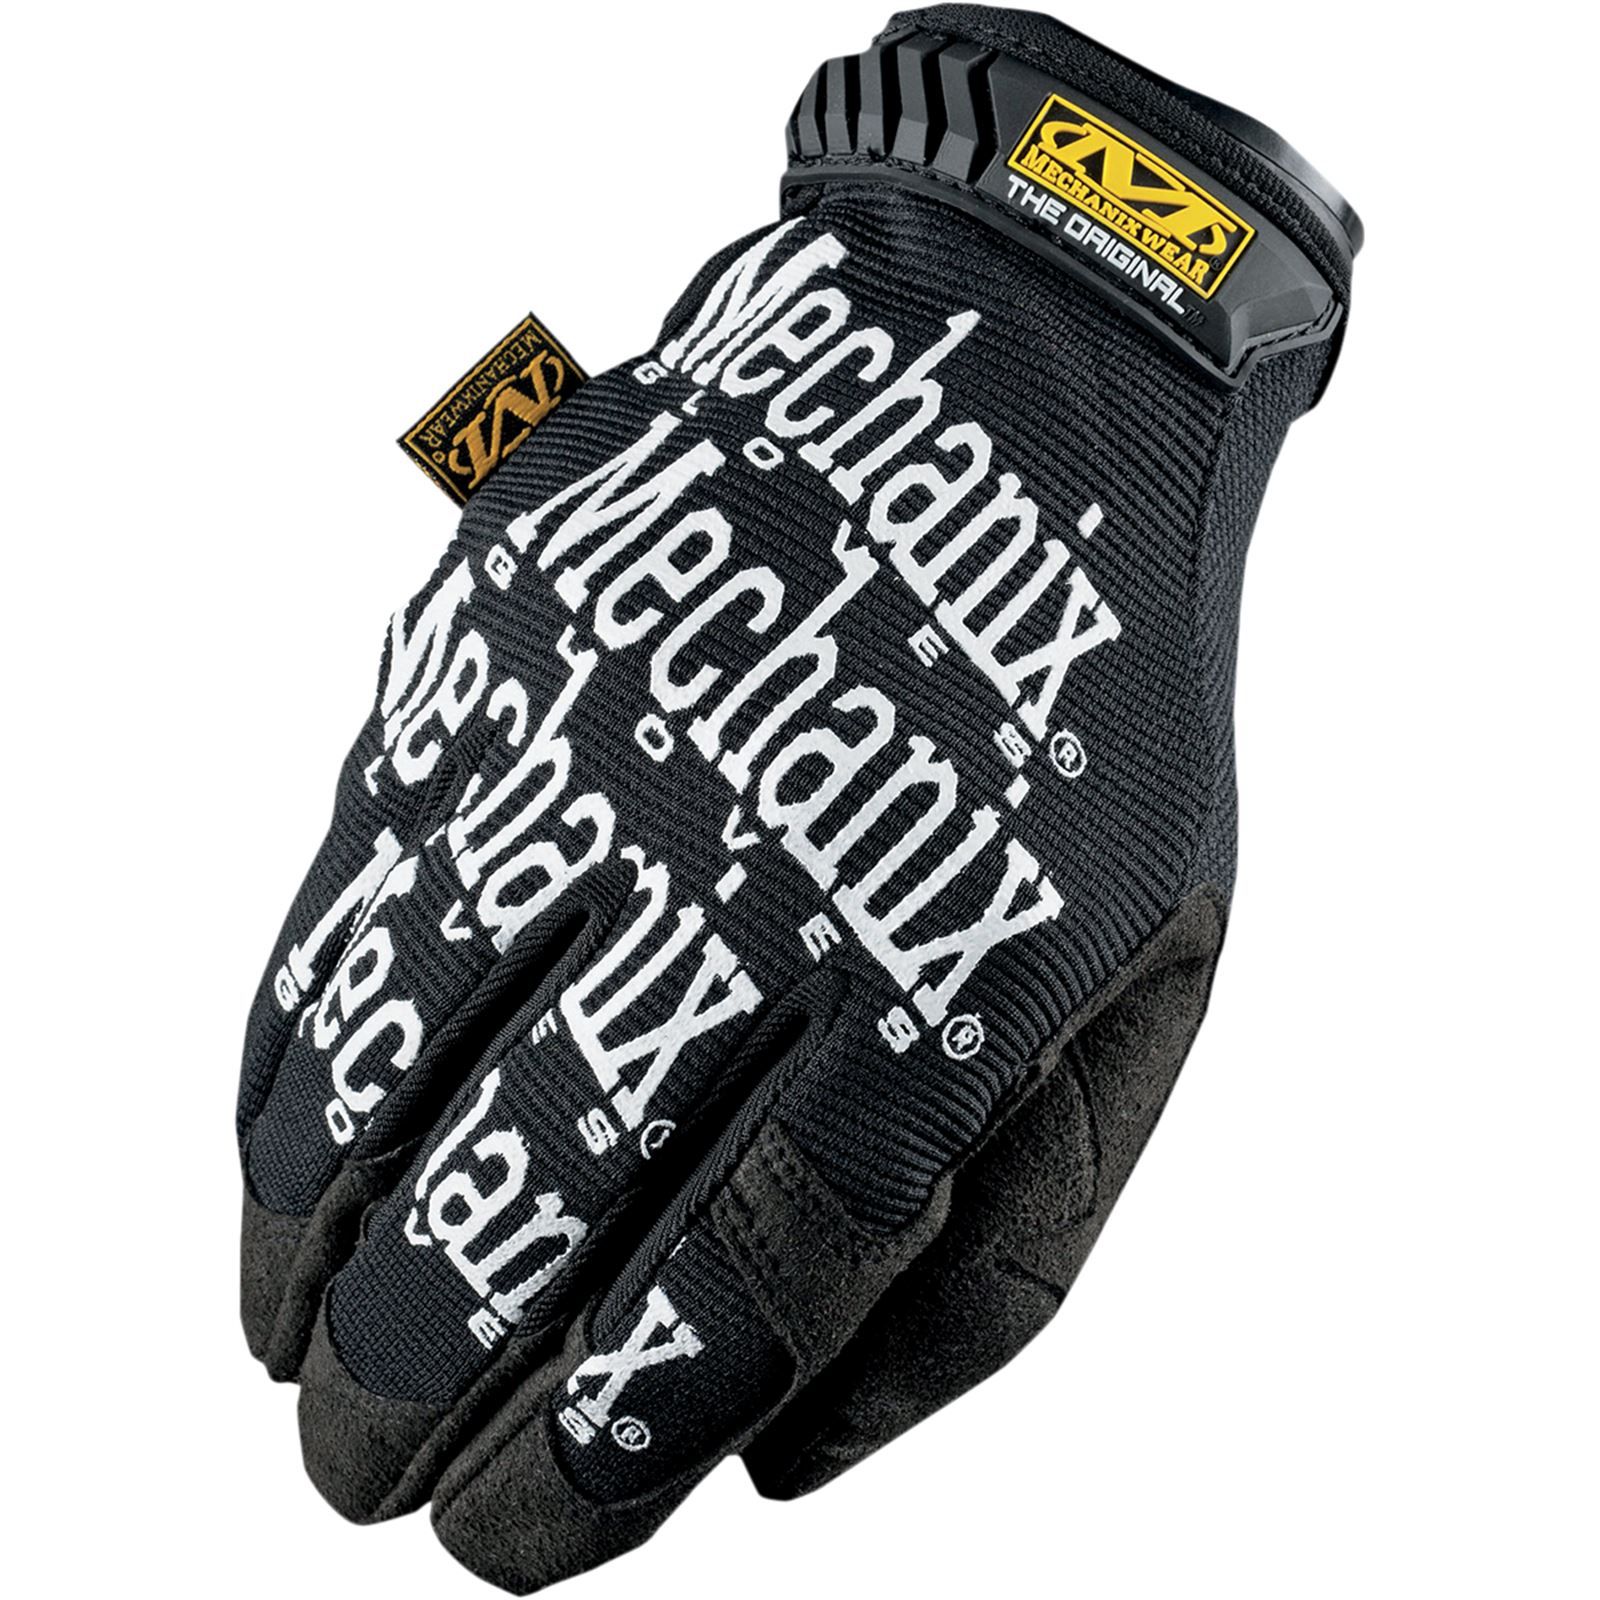 Mechanix Gloves - Black - 10